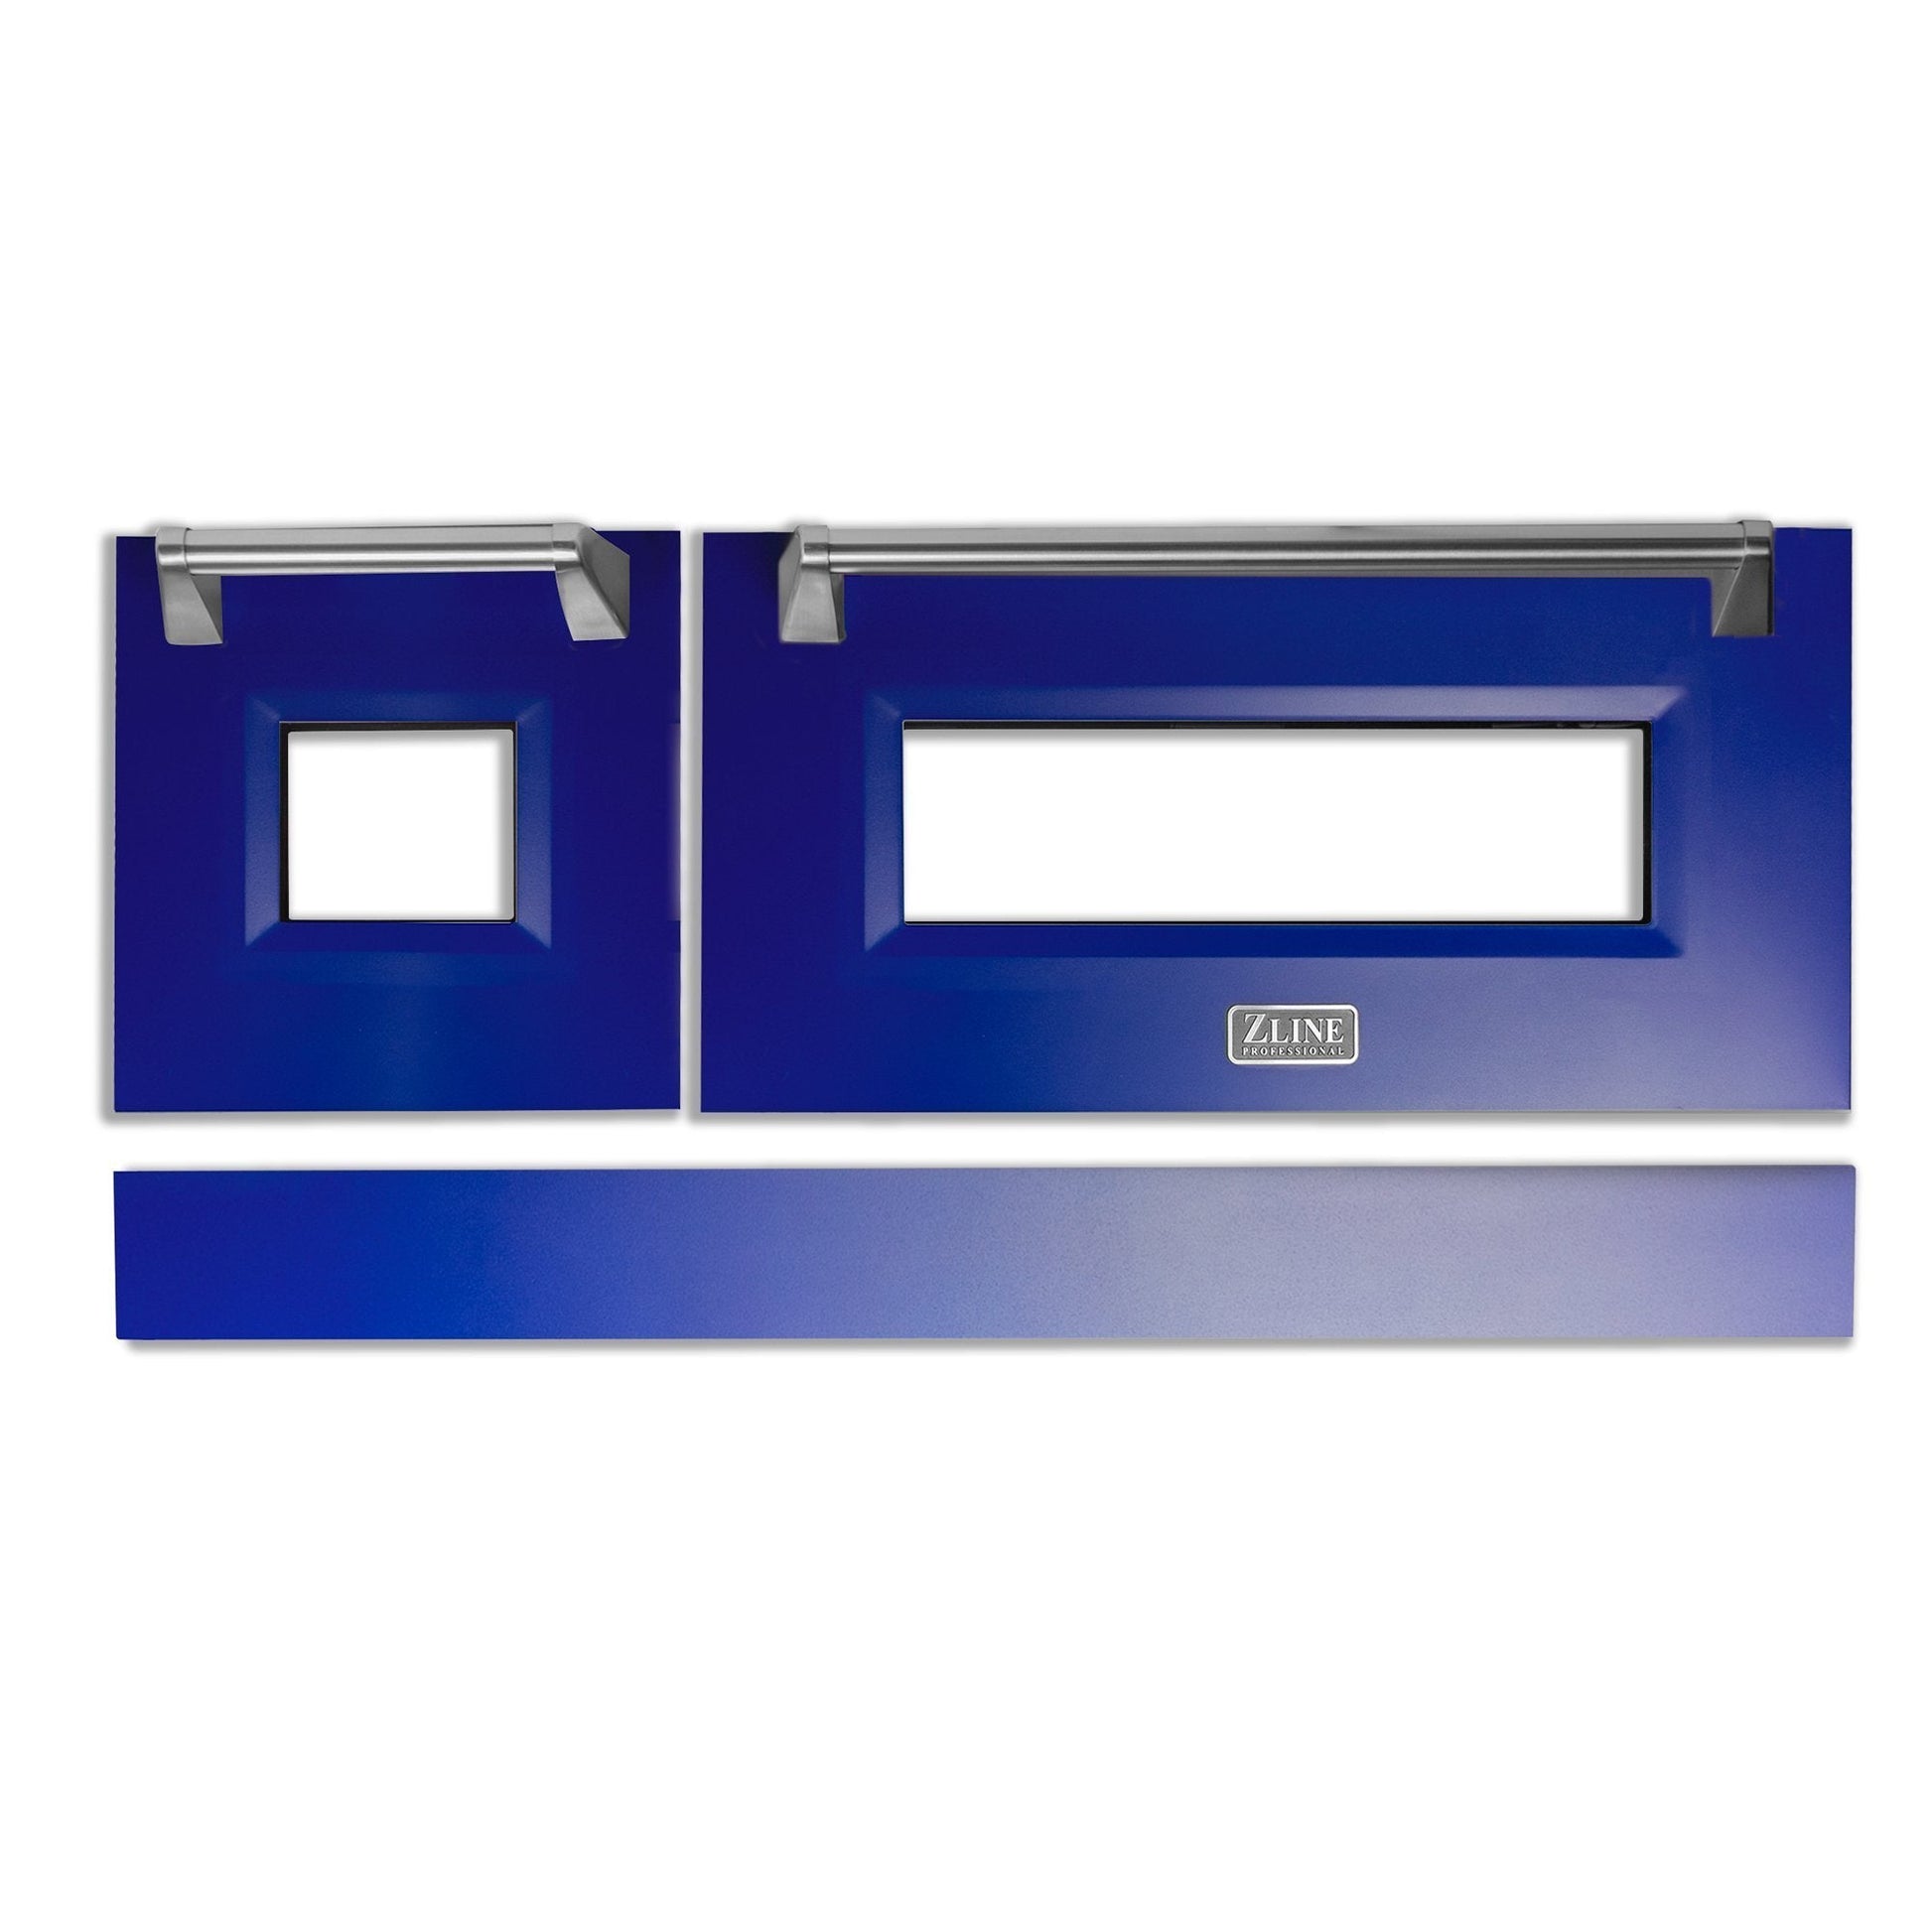 ZLINE 48" DuraSnow Stainless Range Door - Availble in Multiple Color Options